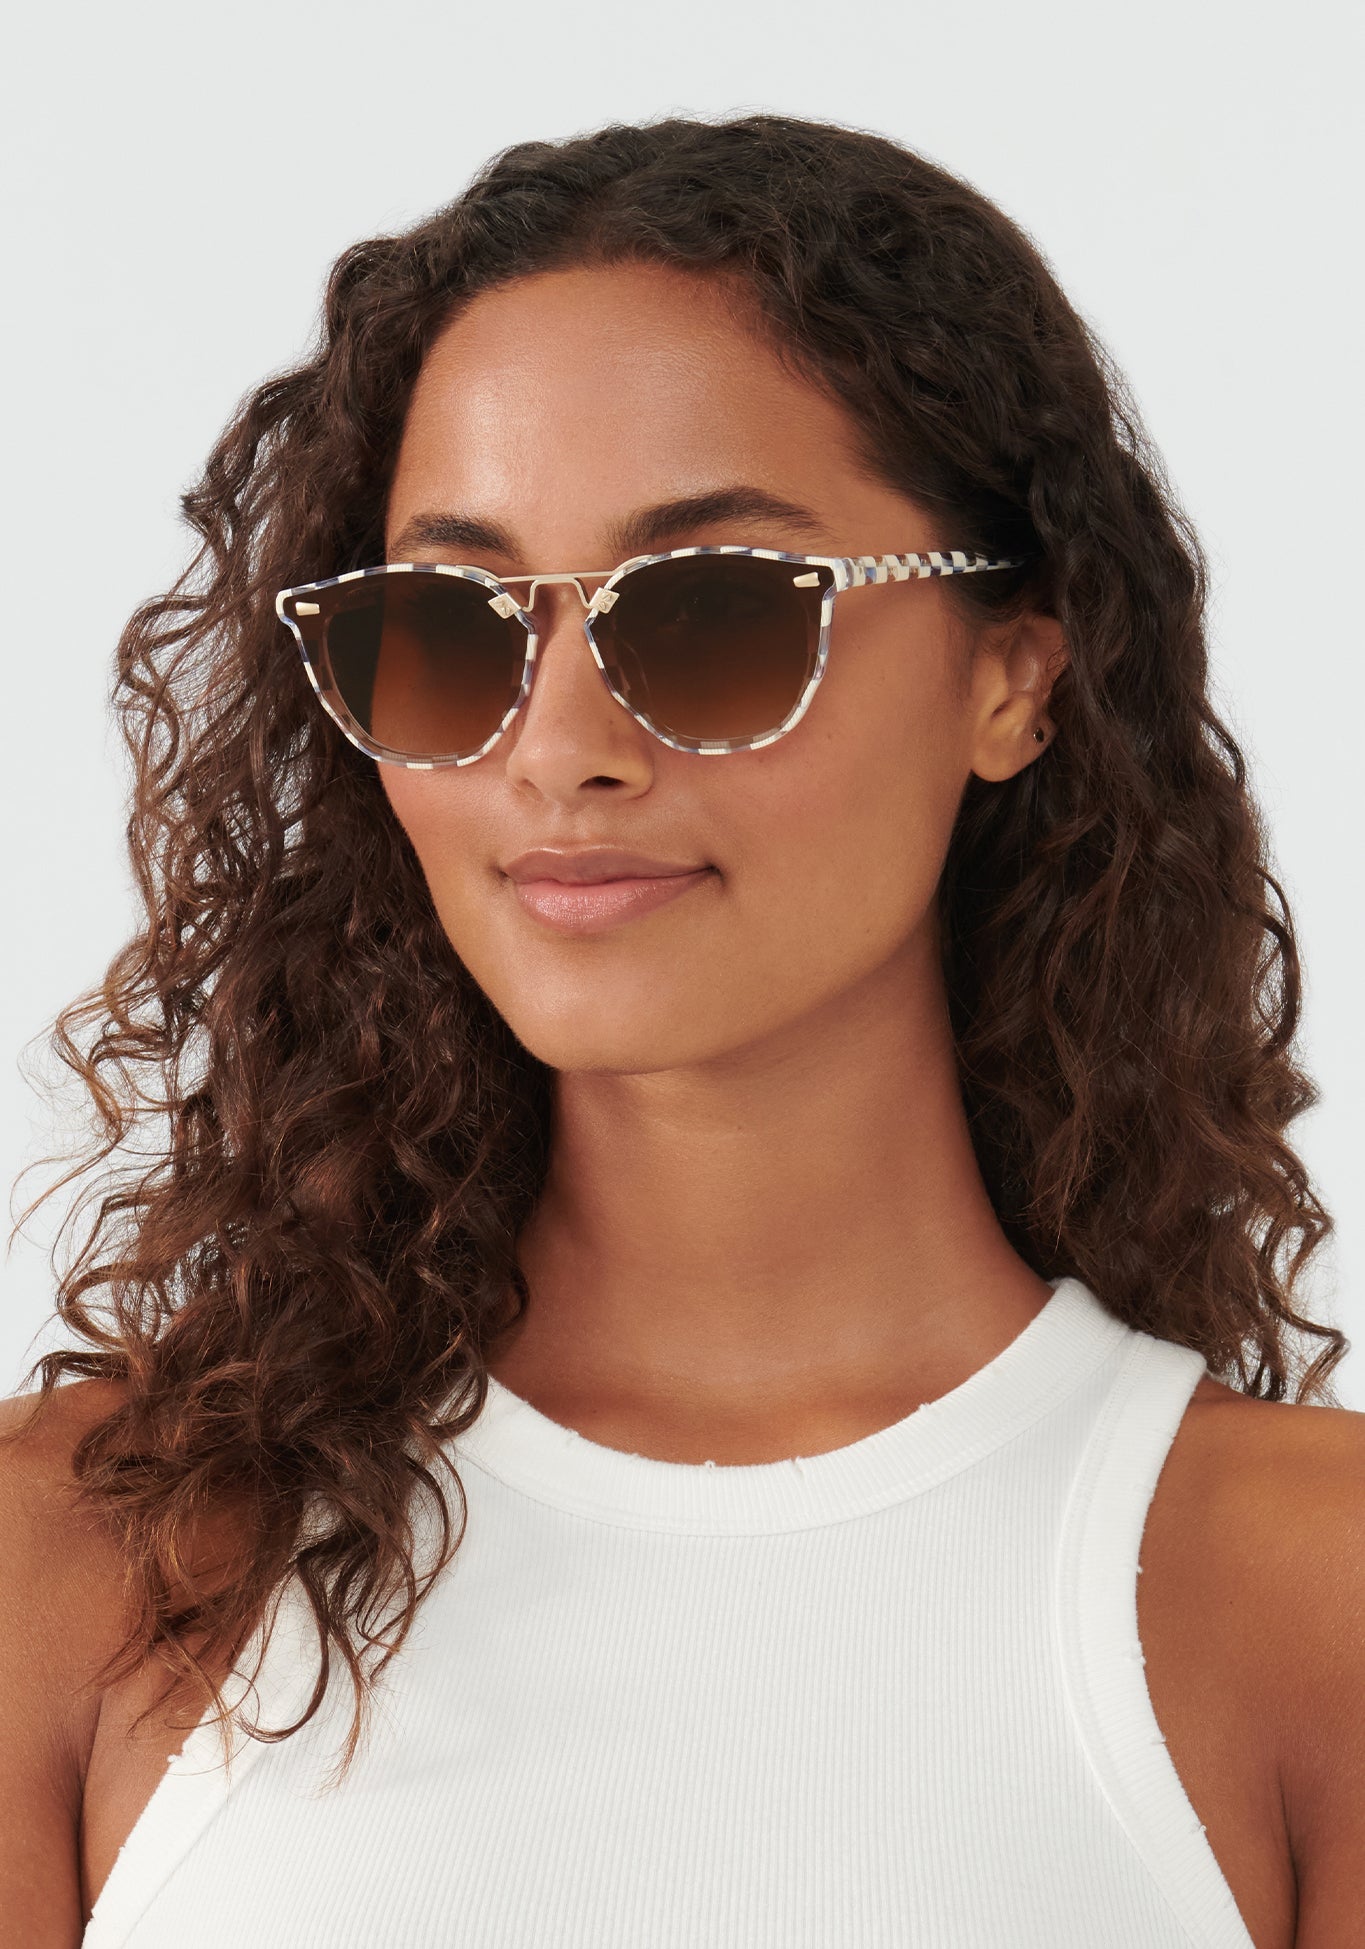 BEAU NYLON | Gingham 12K  Luxury Blue and White Acetate Sunglasses  womens model | Model: Meli